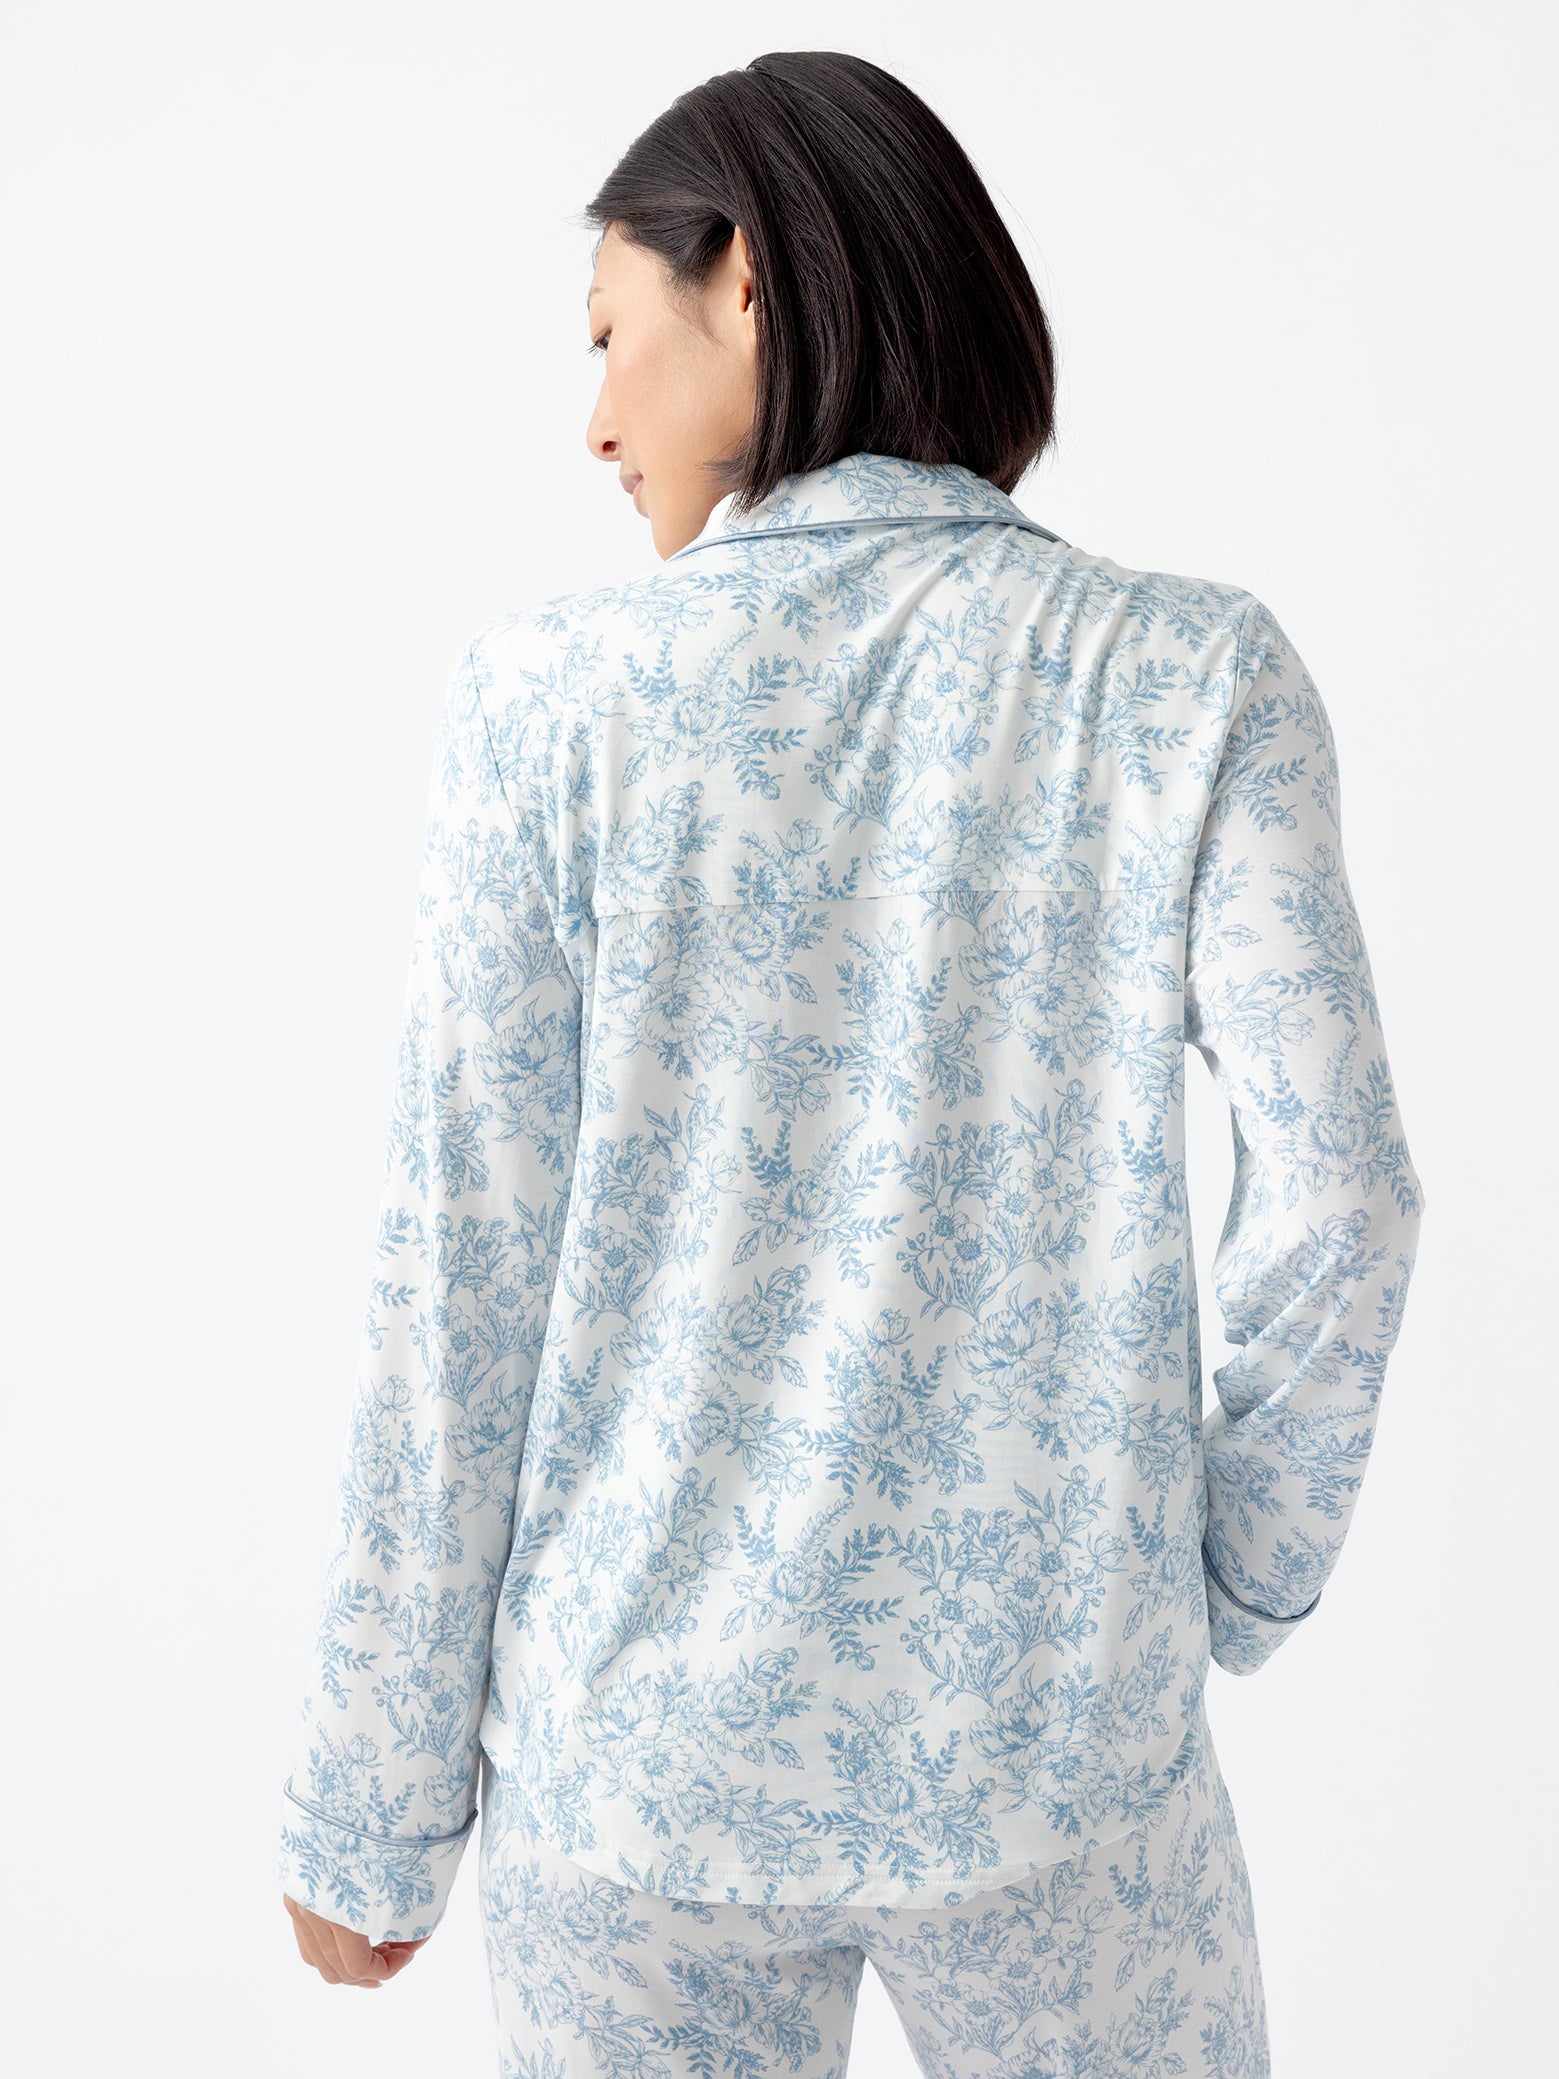 Back of woman wearing blue toile pajama shirt 